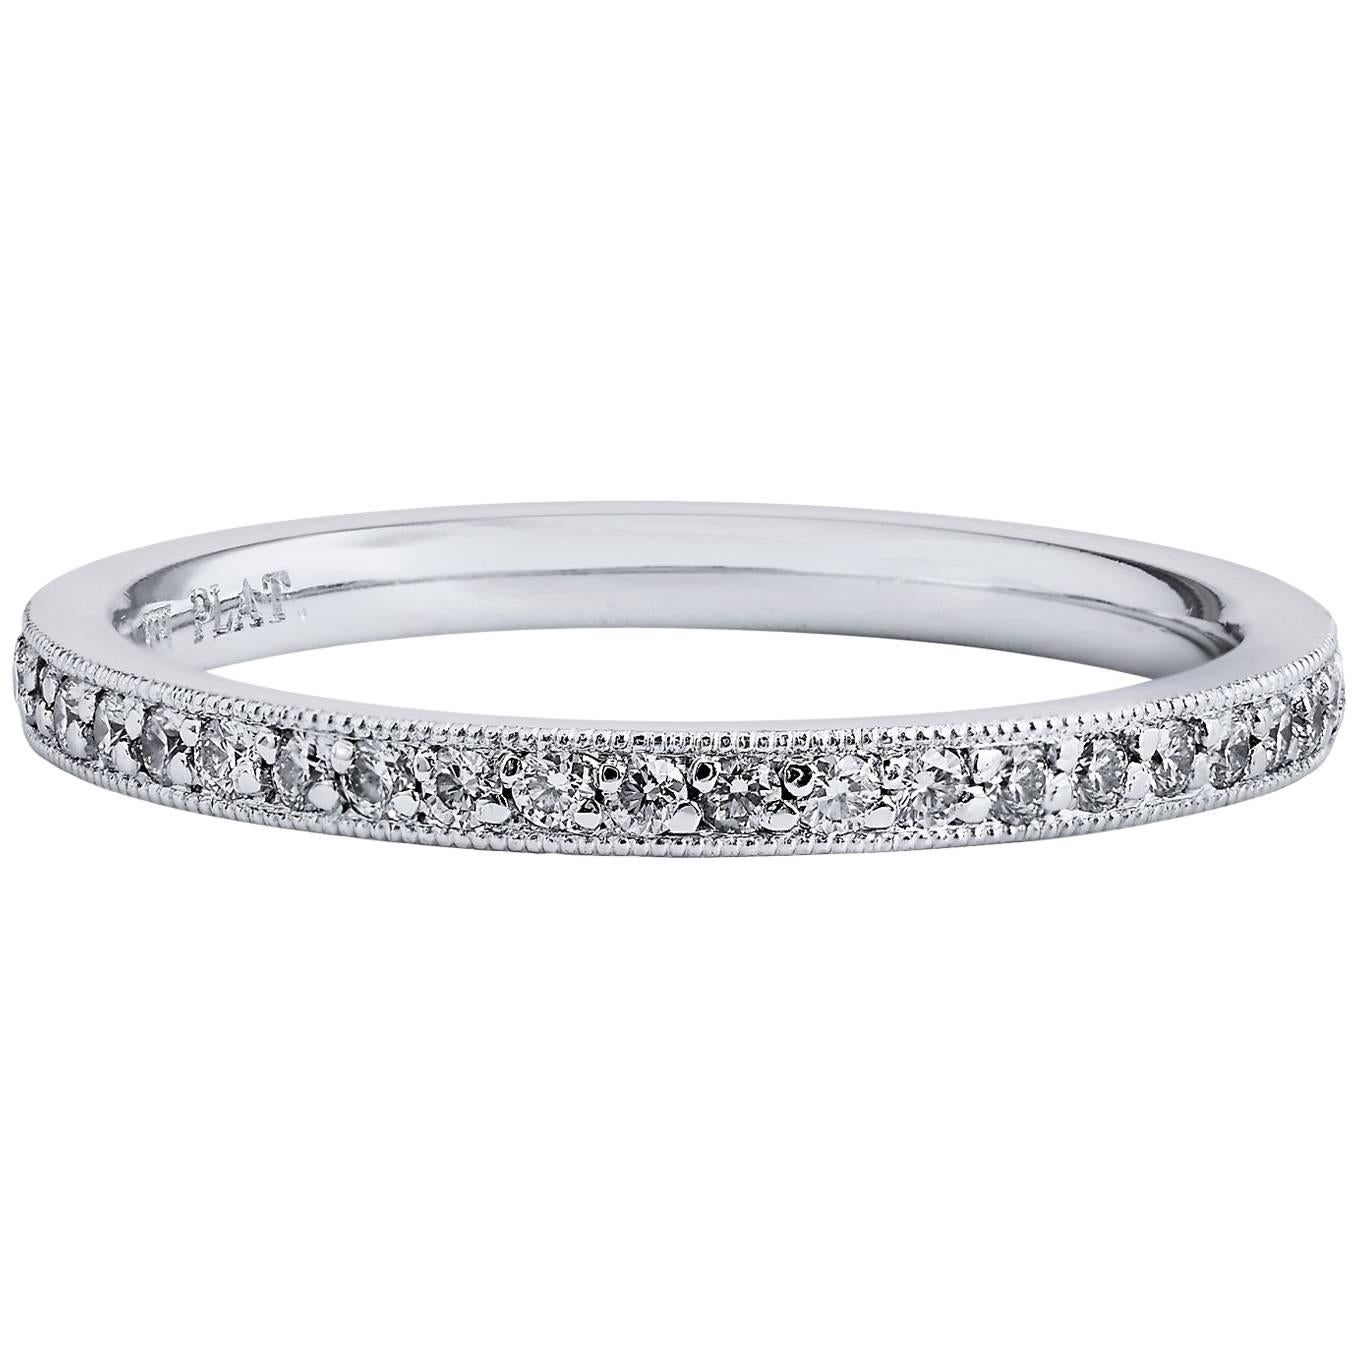 0.36 Carat Diamond Platinum Wedding Band Ring